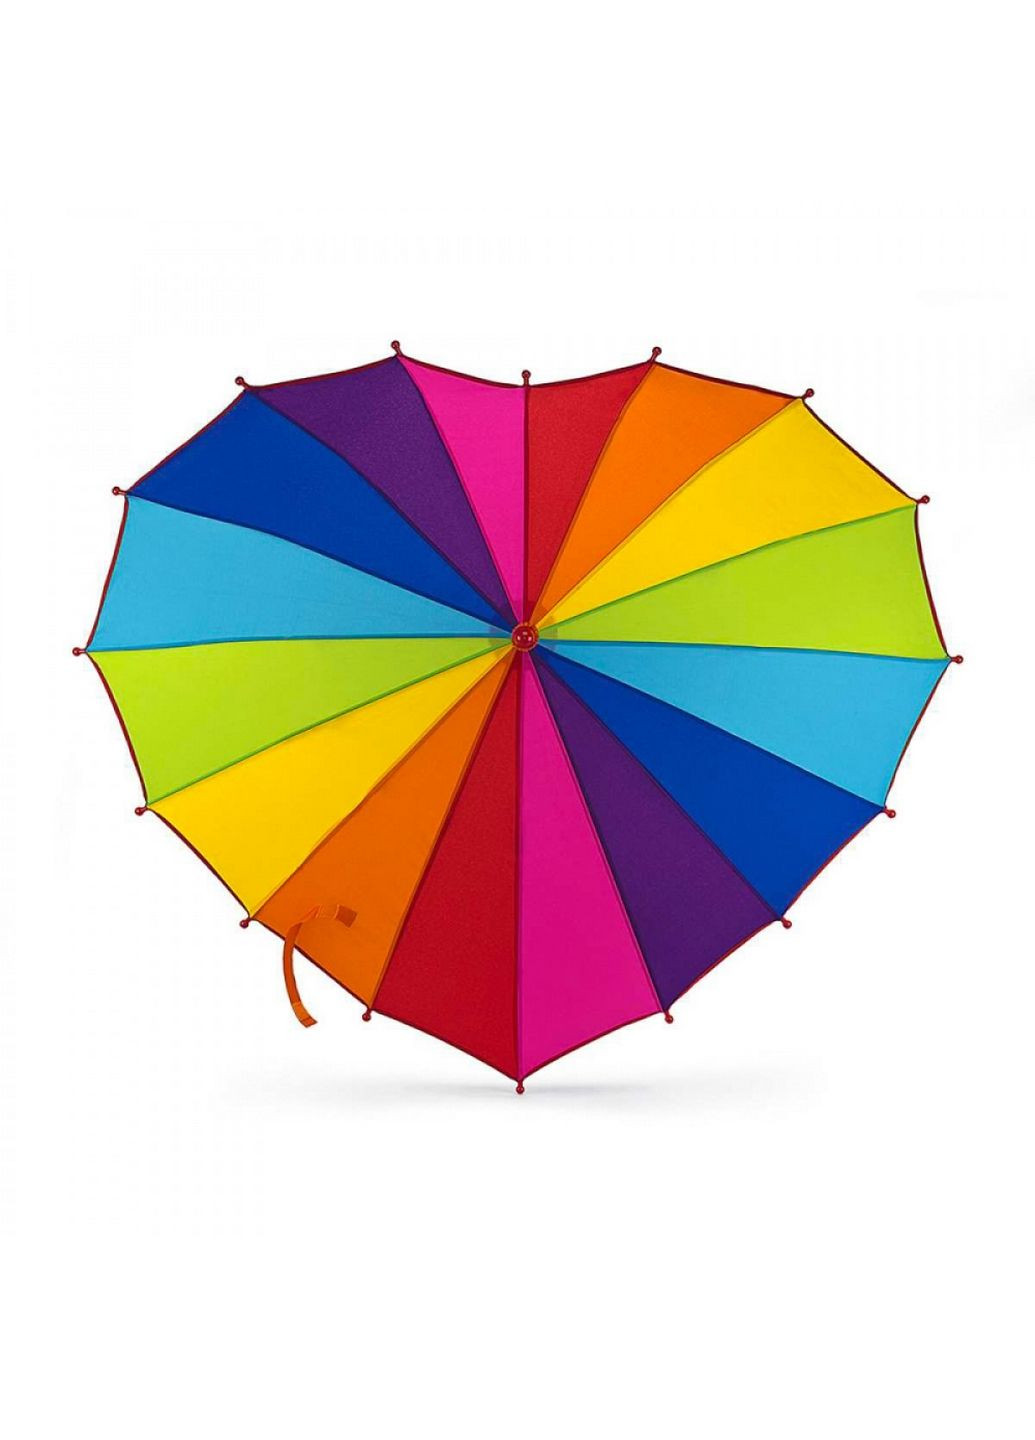 Дитяча парасолька-тростина механічна Fulton (282583095)